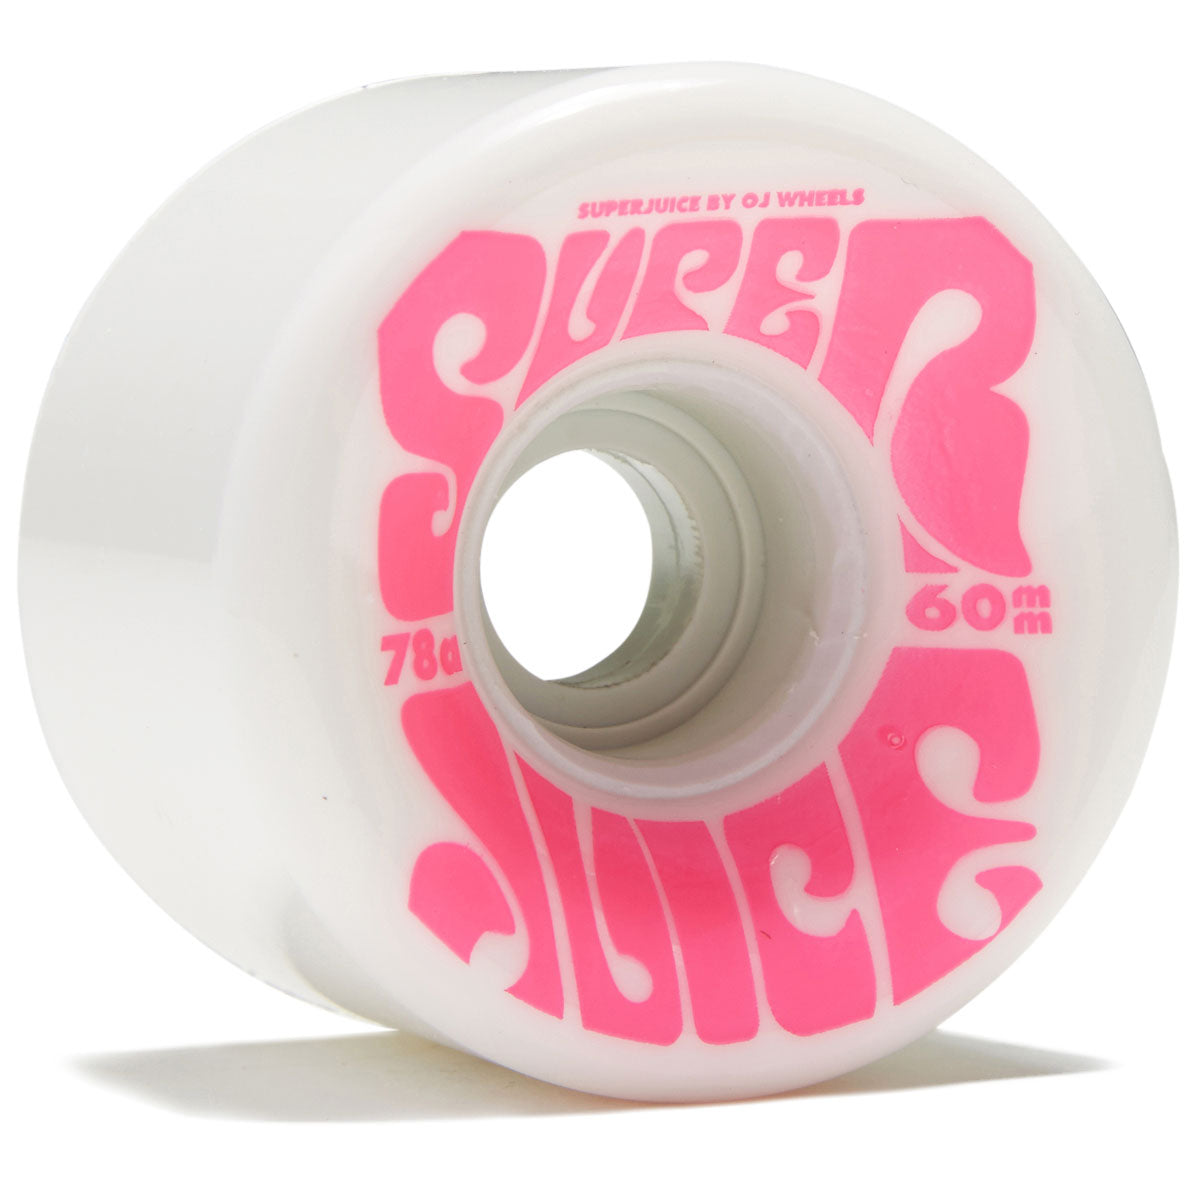 OJ Super Juice 78a Skateboard Wheels - White/Pink - 60mm image 1